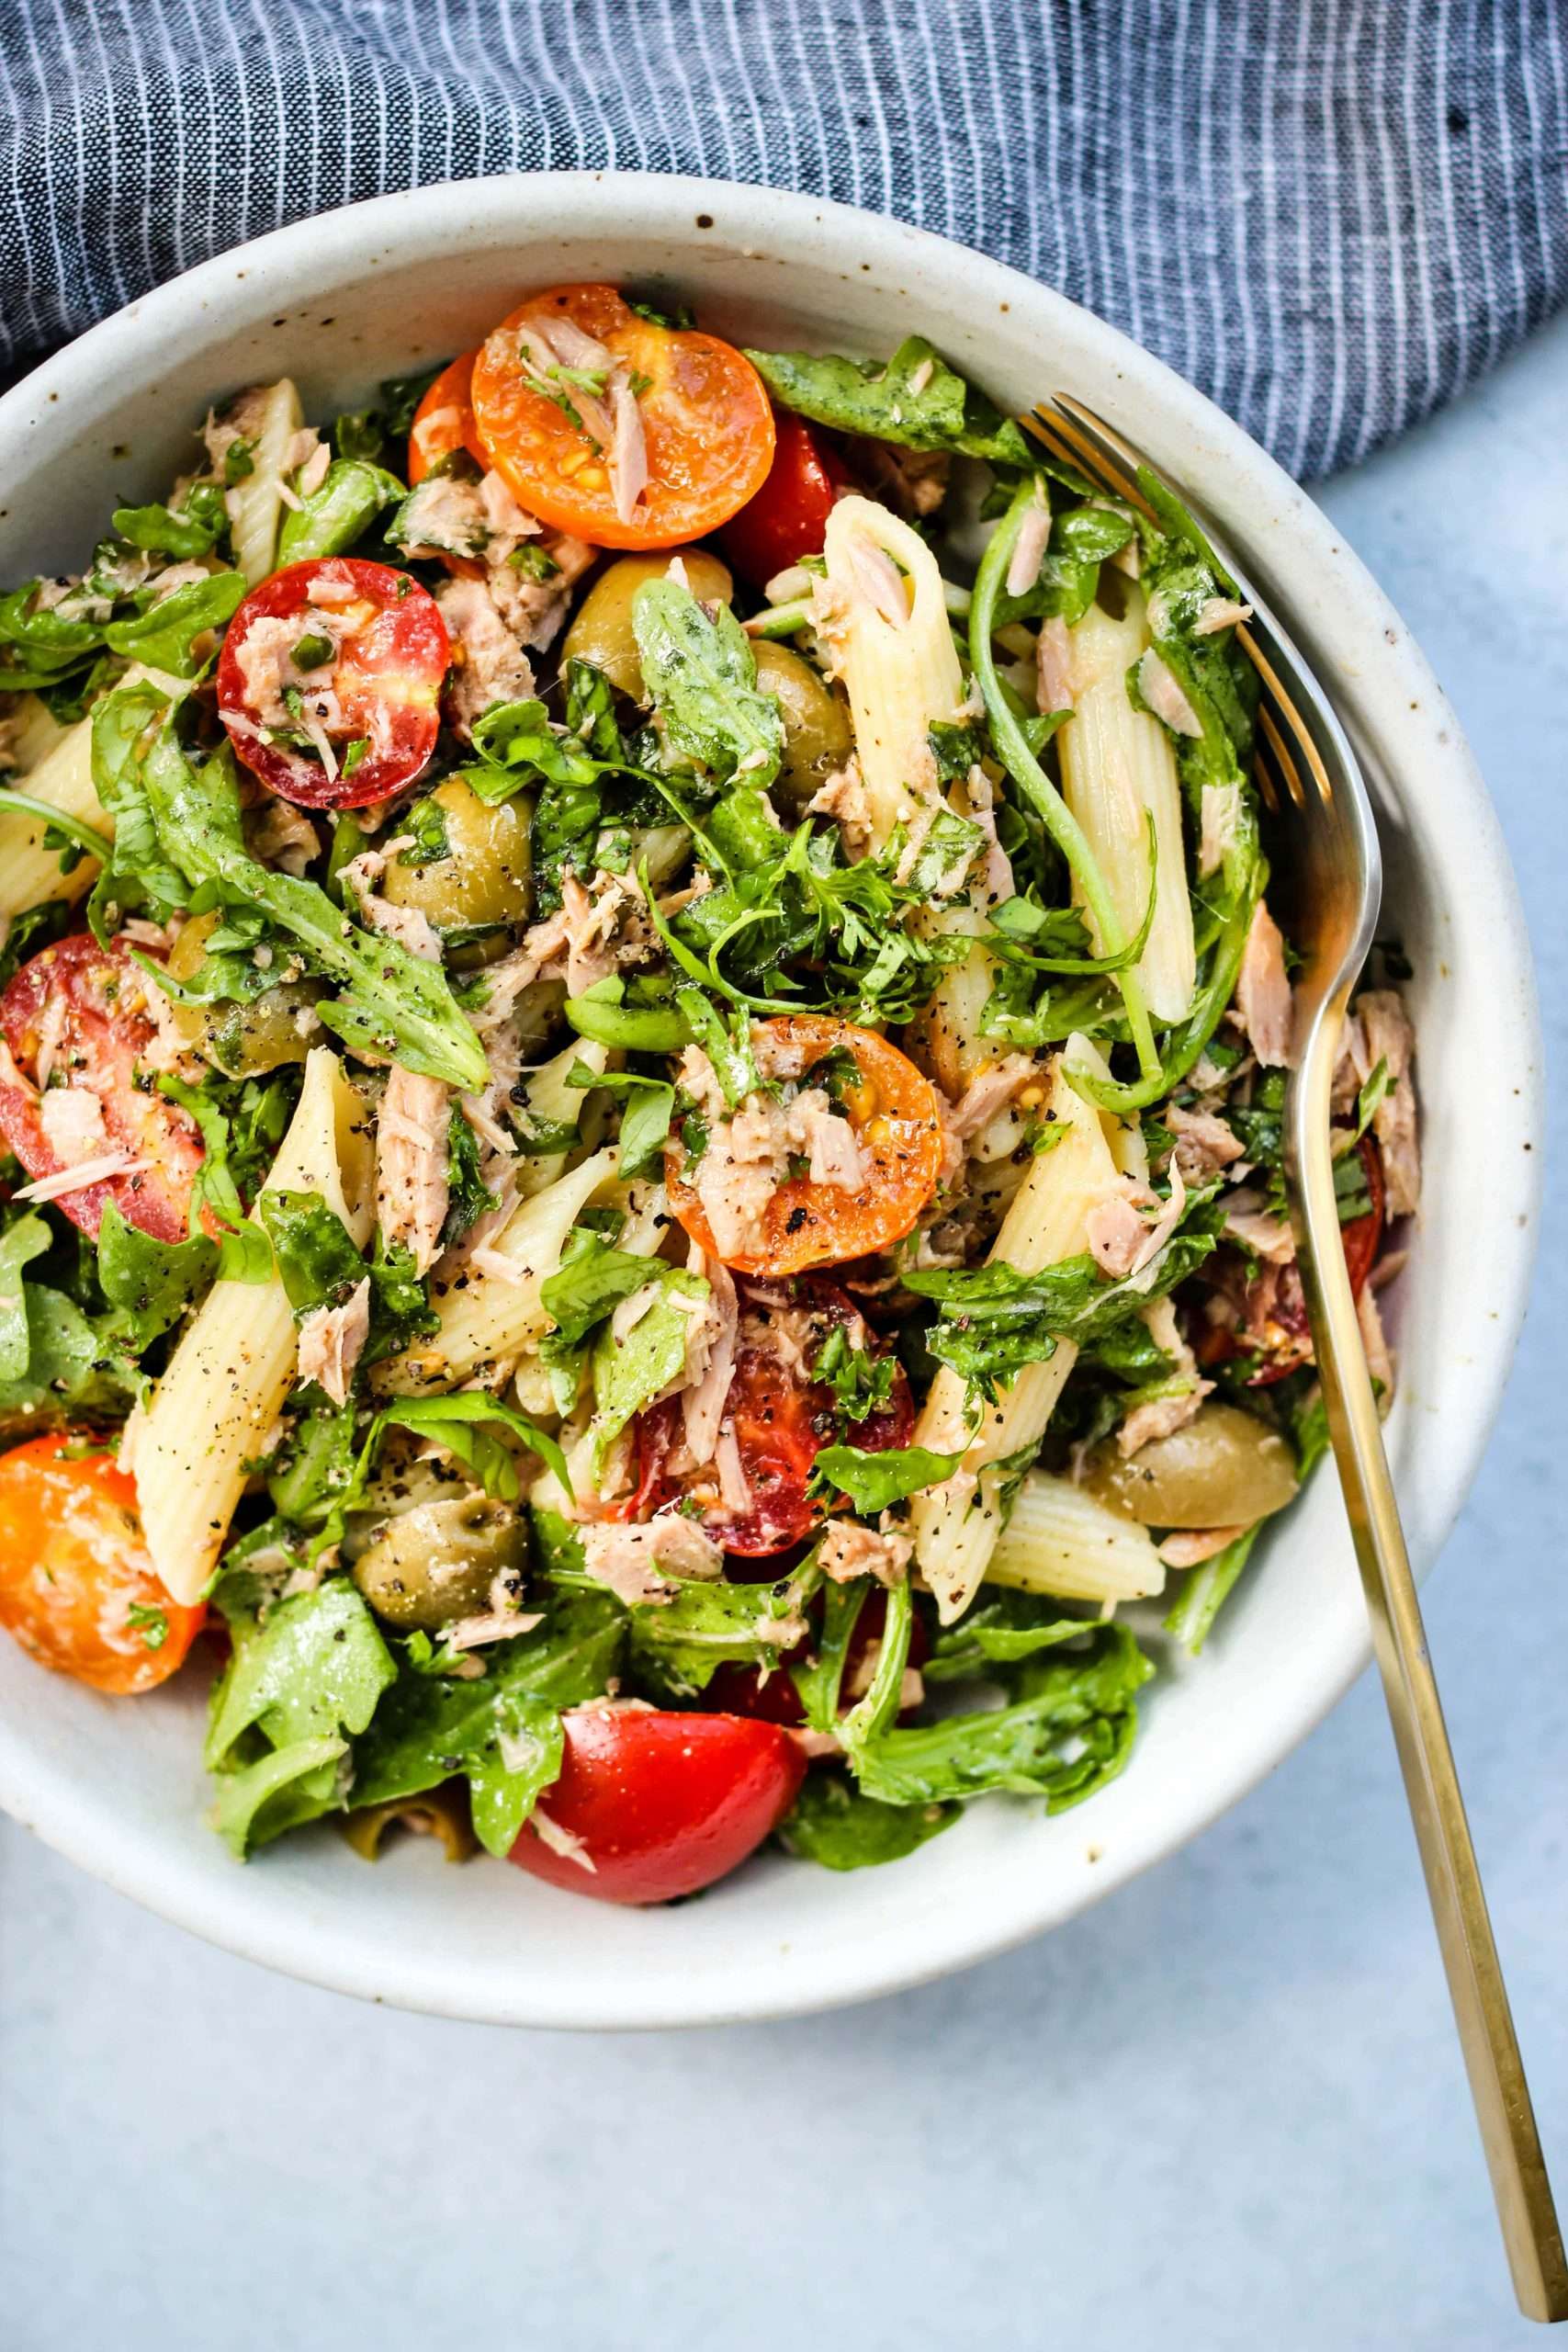 How To Make A Healthy Tuna Salad